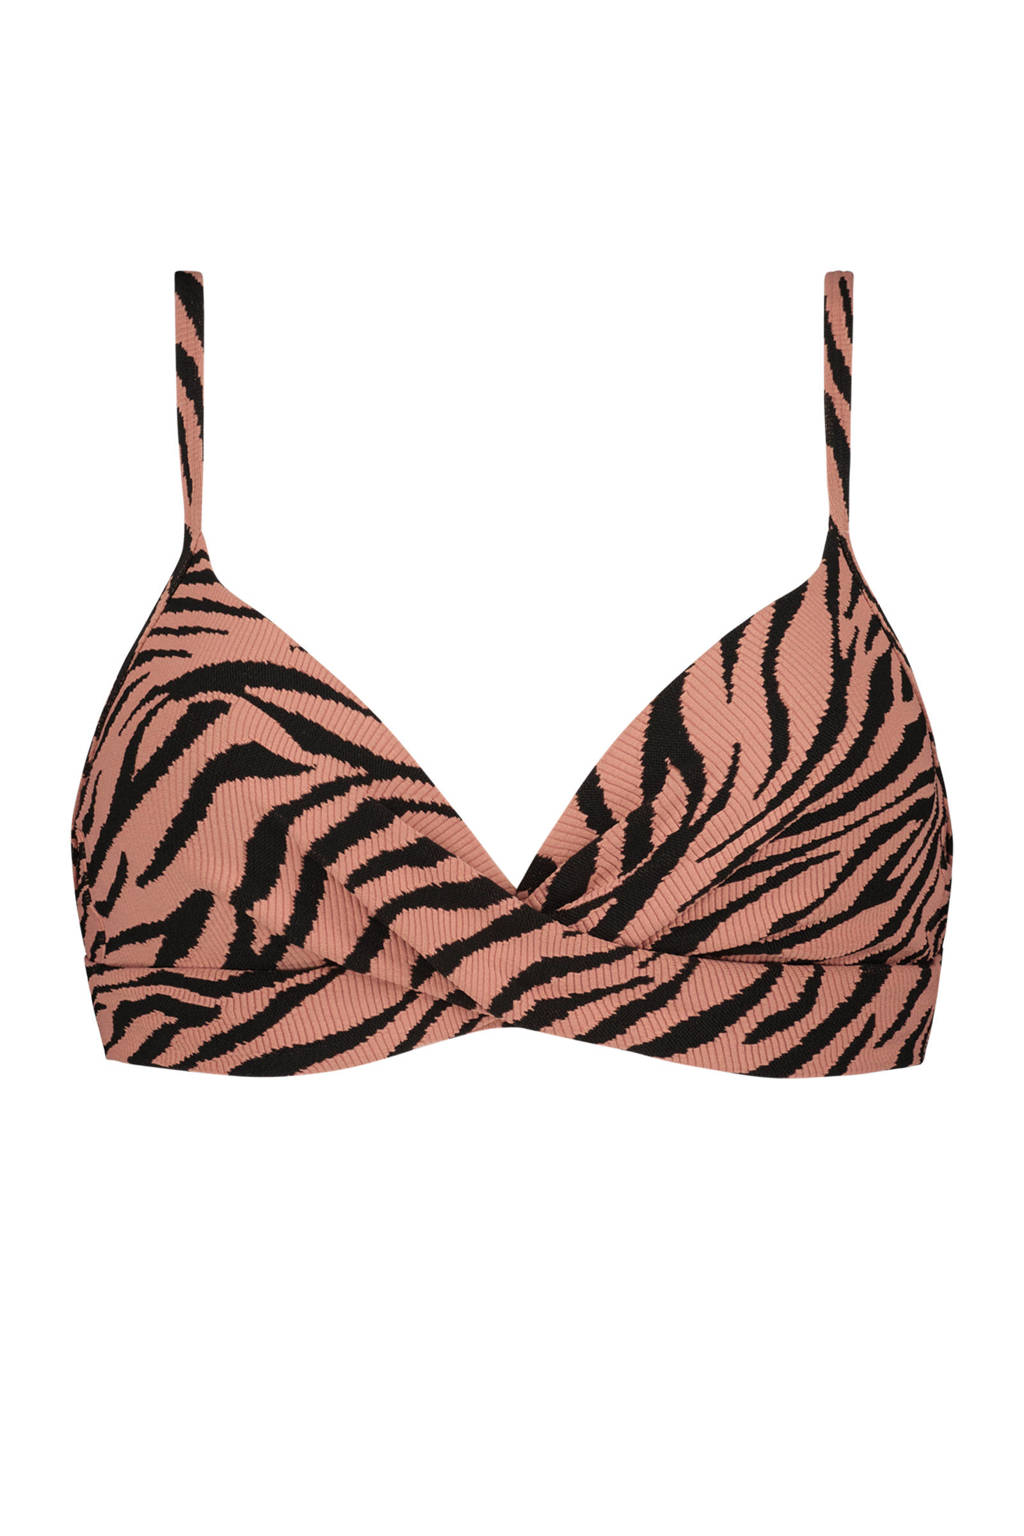 Beachlife voorgevormde beugel bikinitop met zebraprint zalmroze/zwart, Zalmroze/zwart